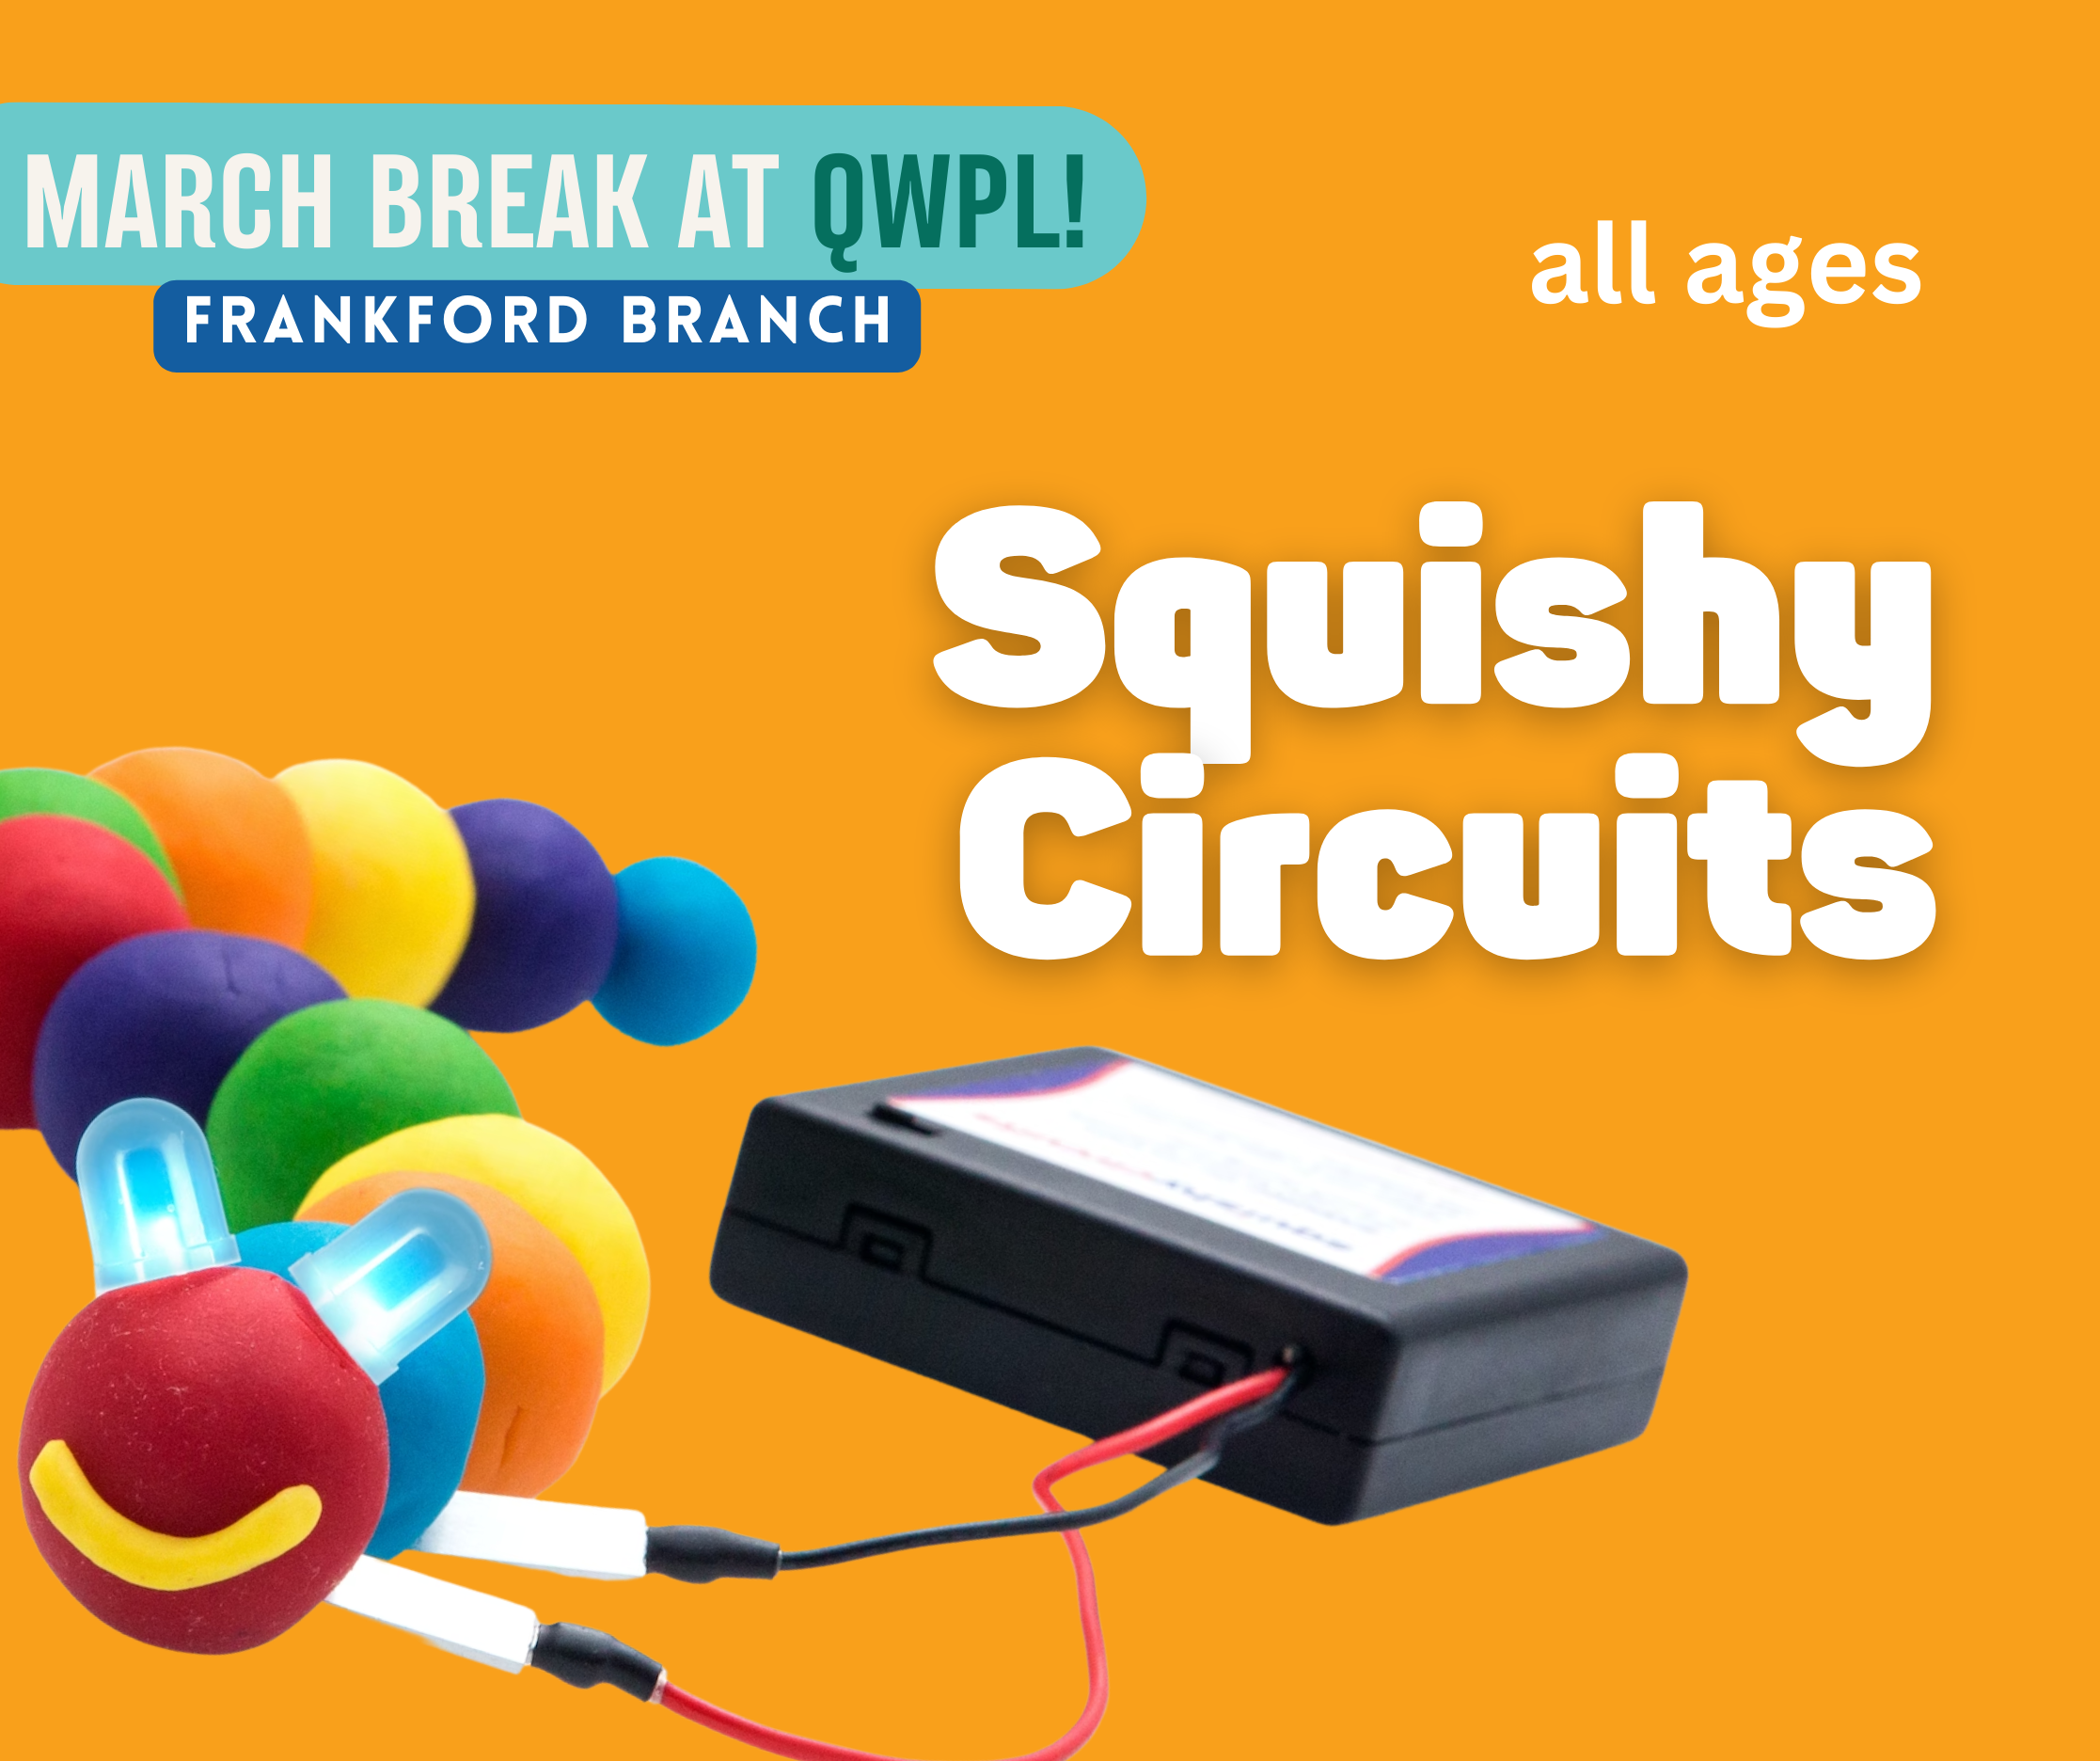 Squishy circuits graphic